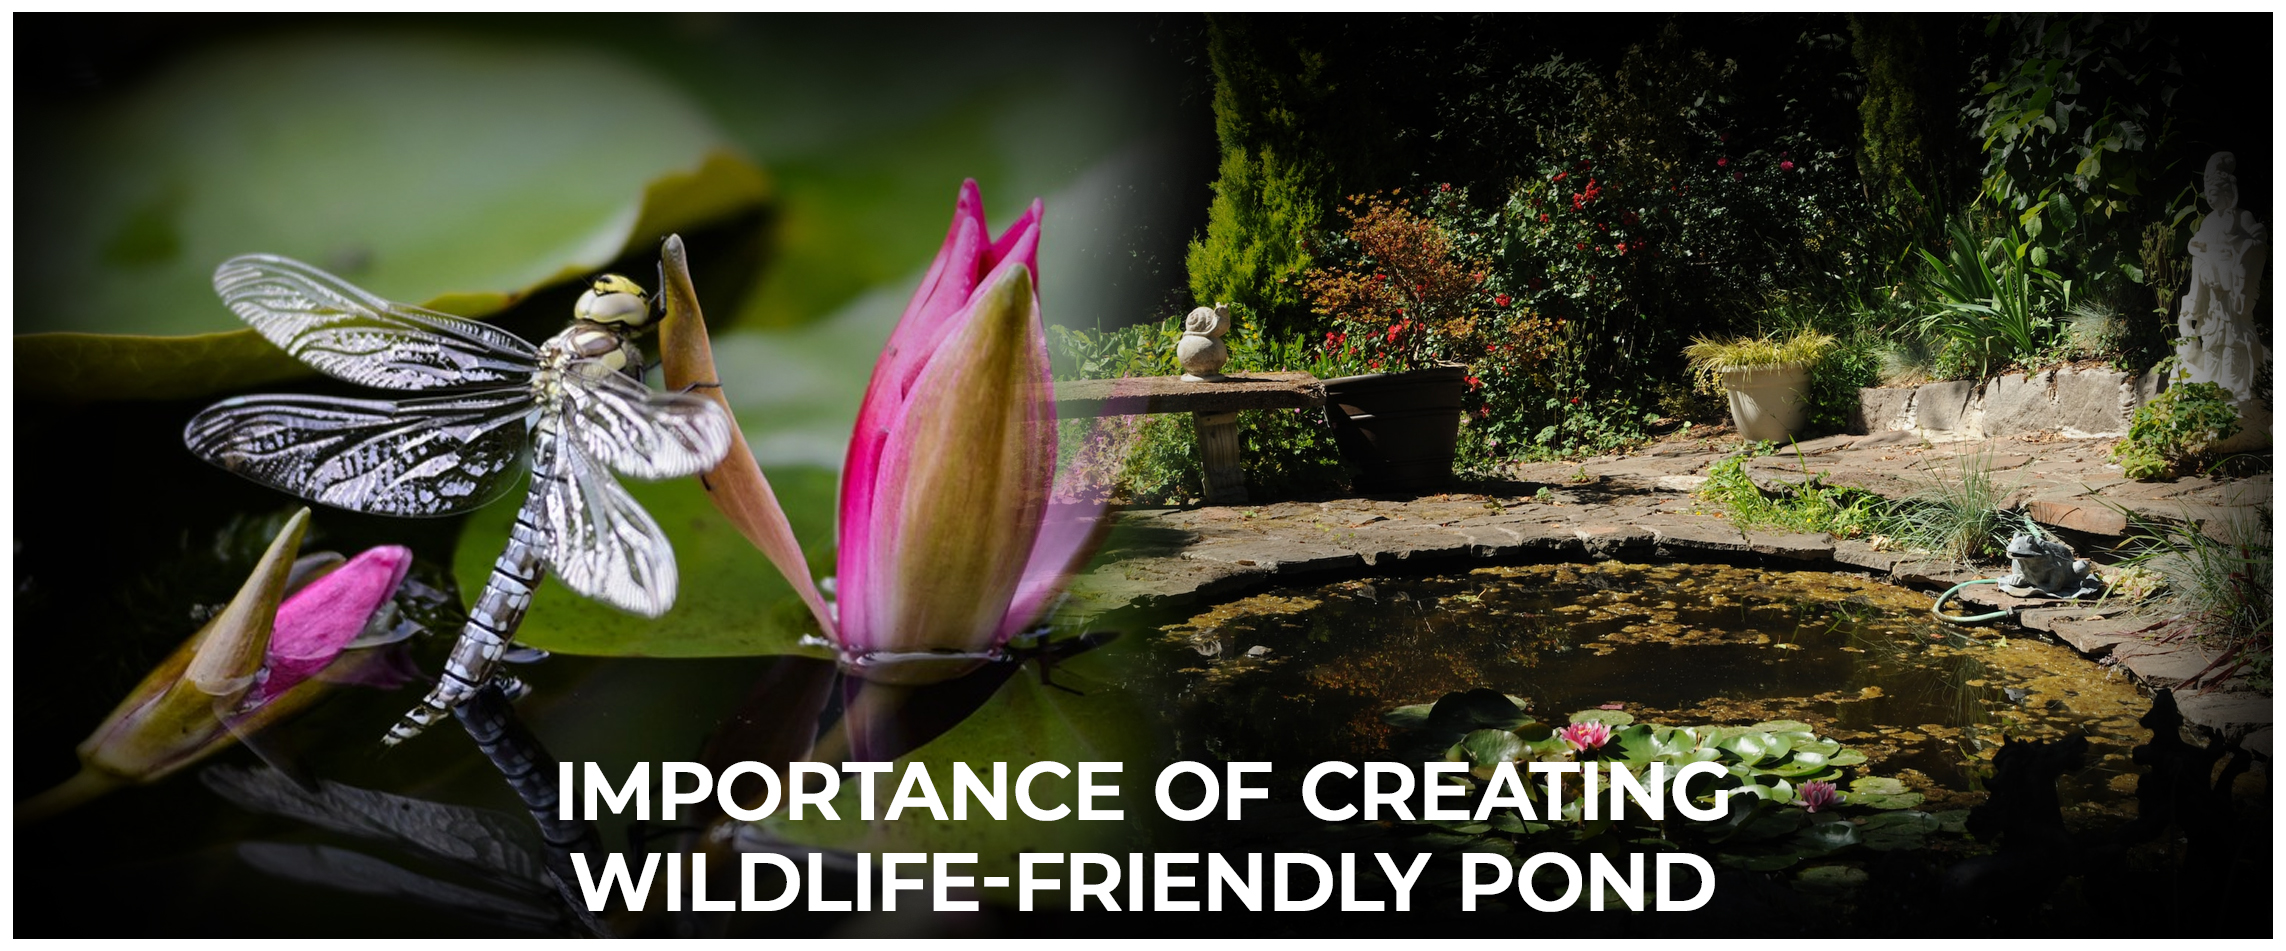 Importance of Creating wildlife pond